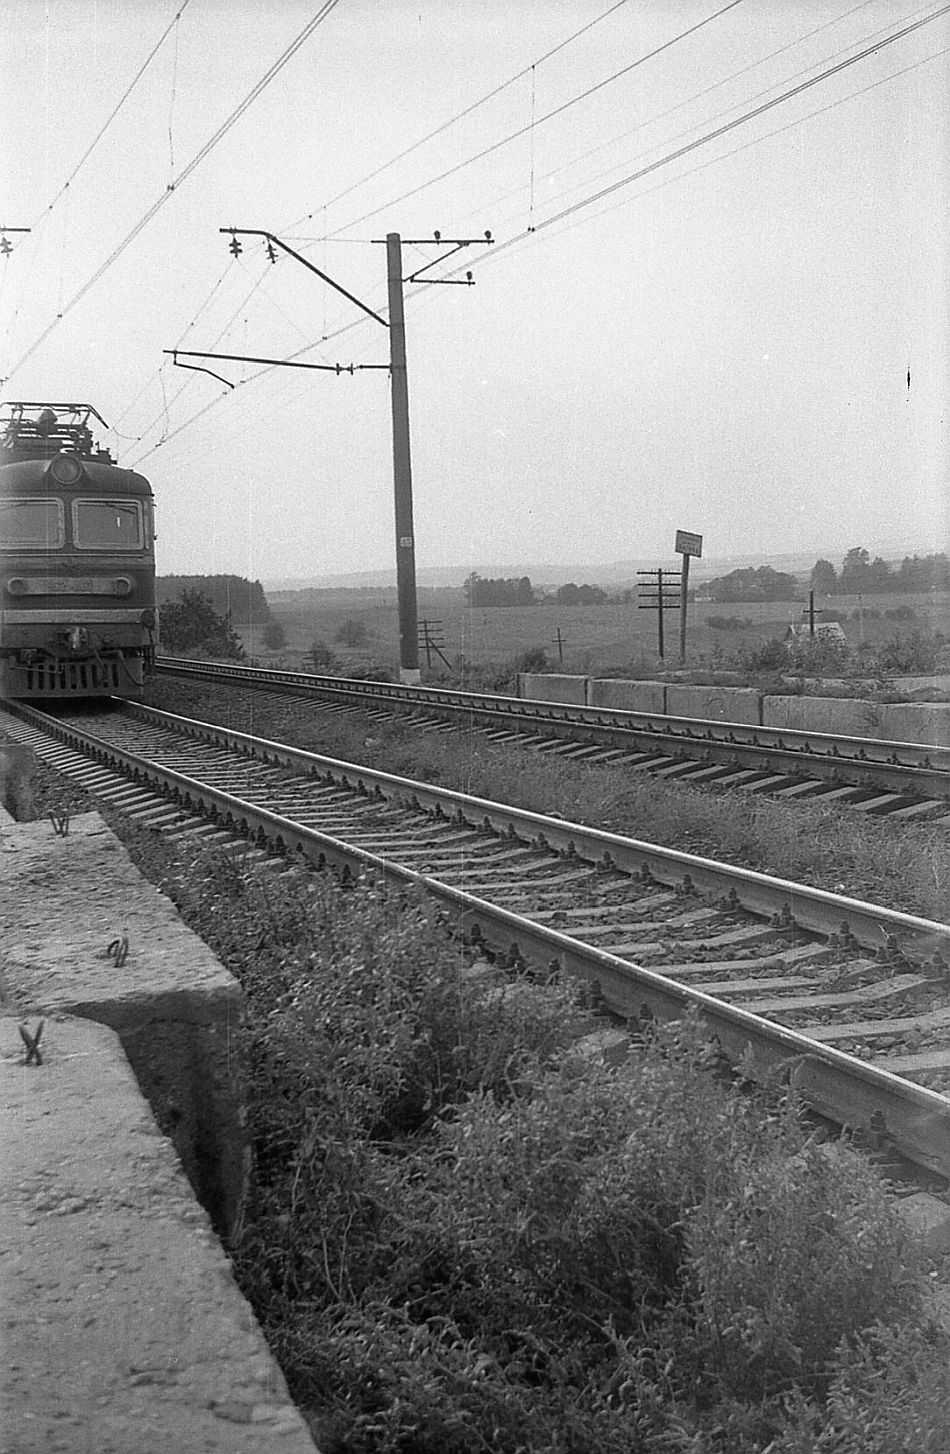 ЧС2-401; Moscow Railway — Stations & ways